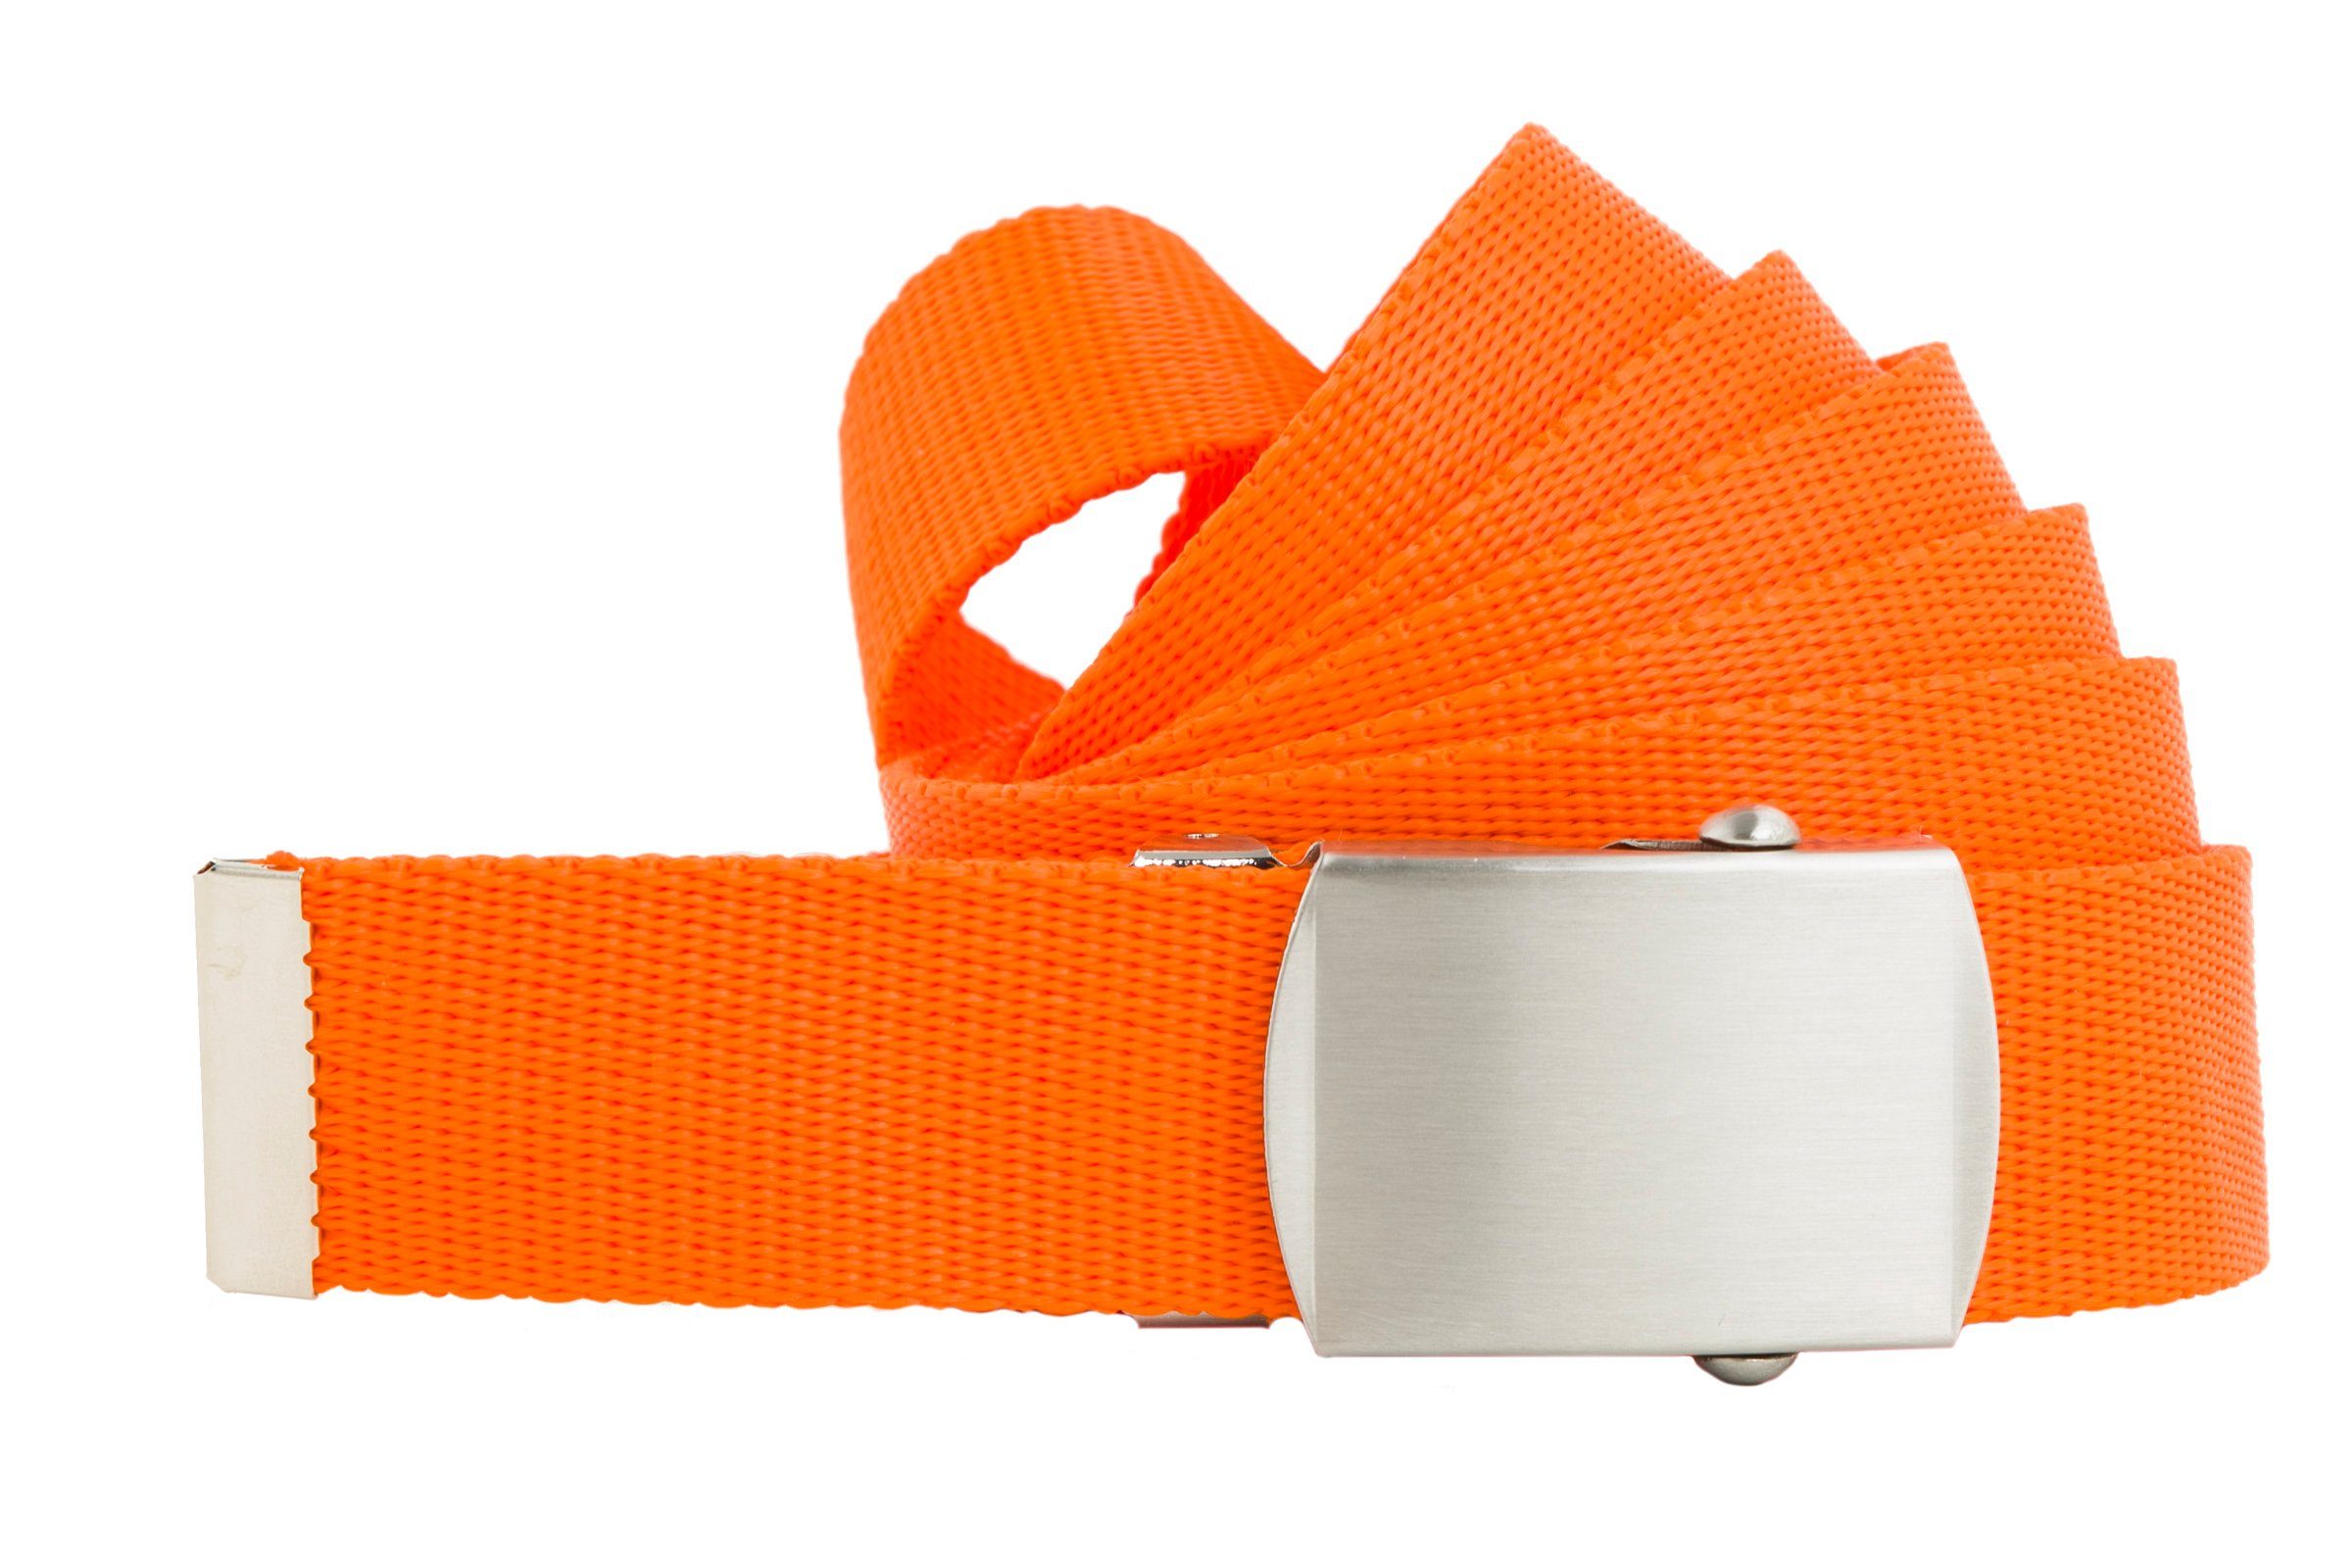 shenky 3cm Länge Breite Gürtel Orange Gürtel, 160cm Textilgürtel) robust Damengürtel (schmaler Stoffgürtel 100cm bis